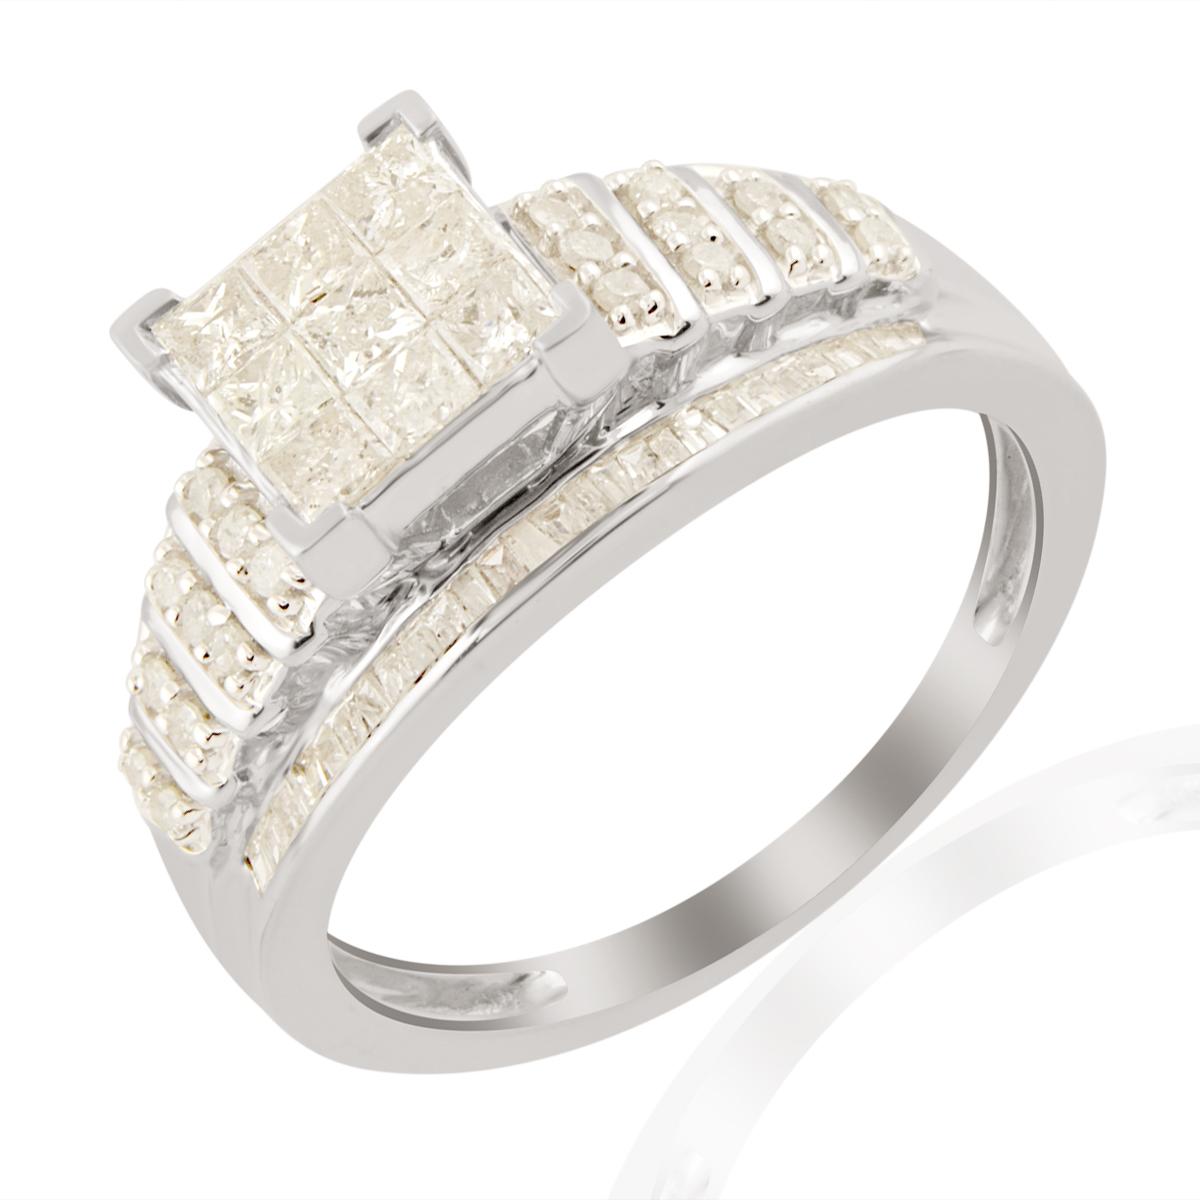 1ct Diamond Sterling Silver Ring | Gemporia